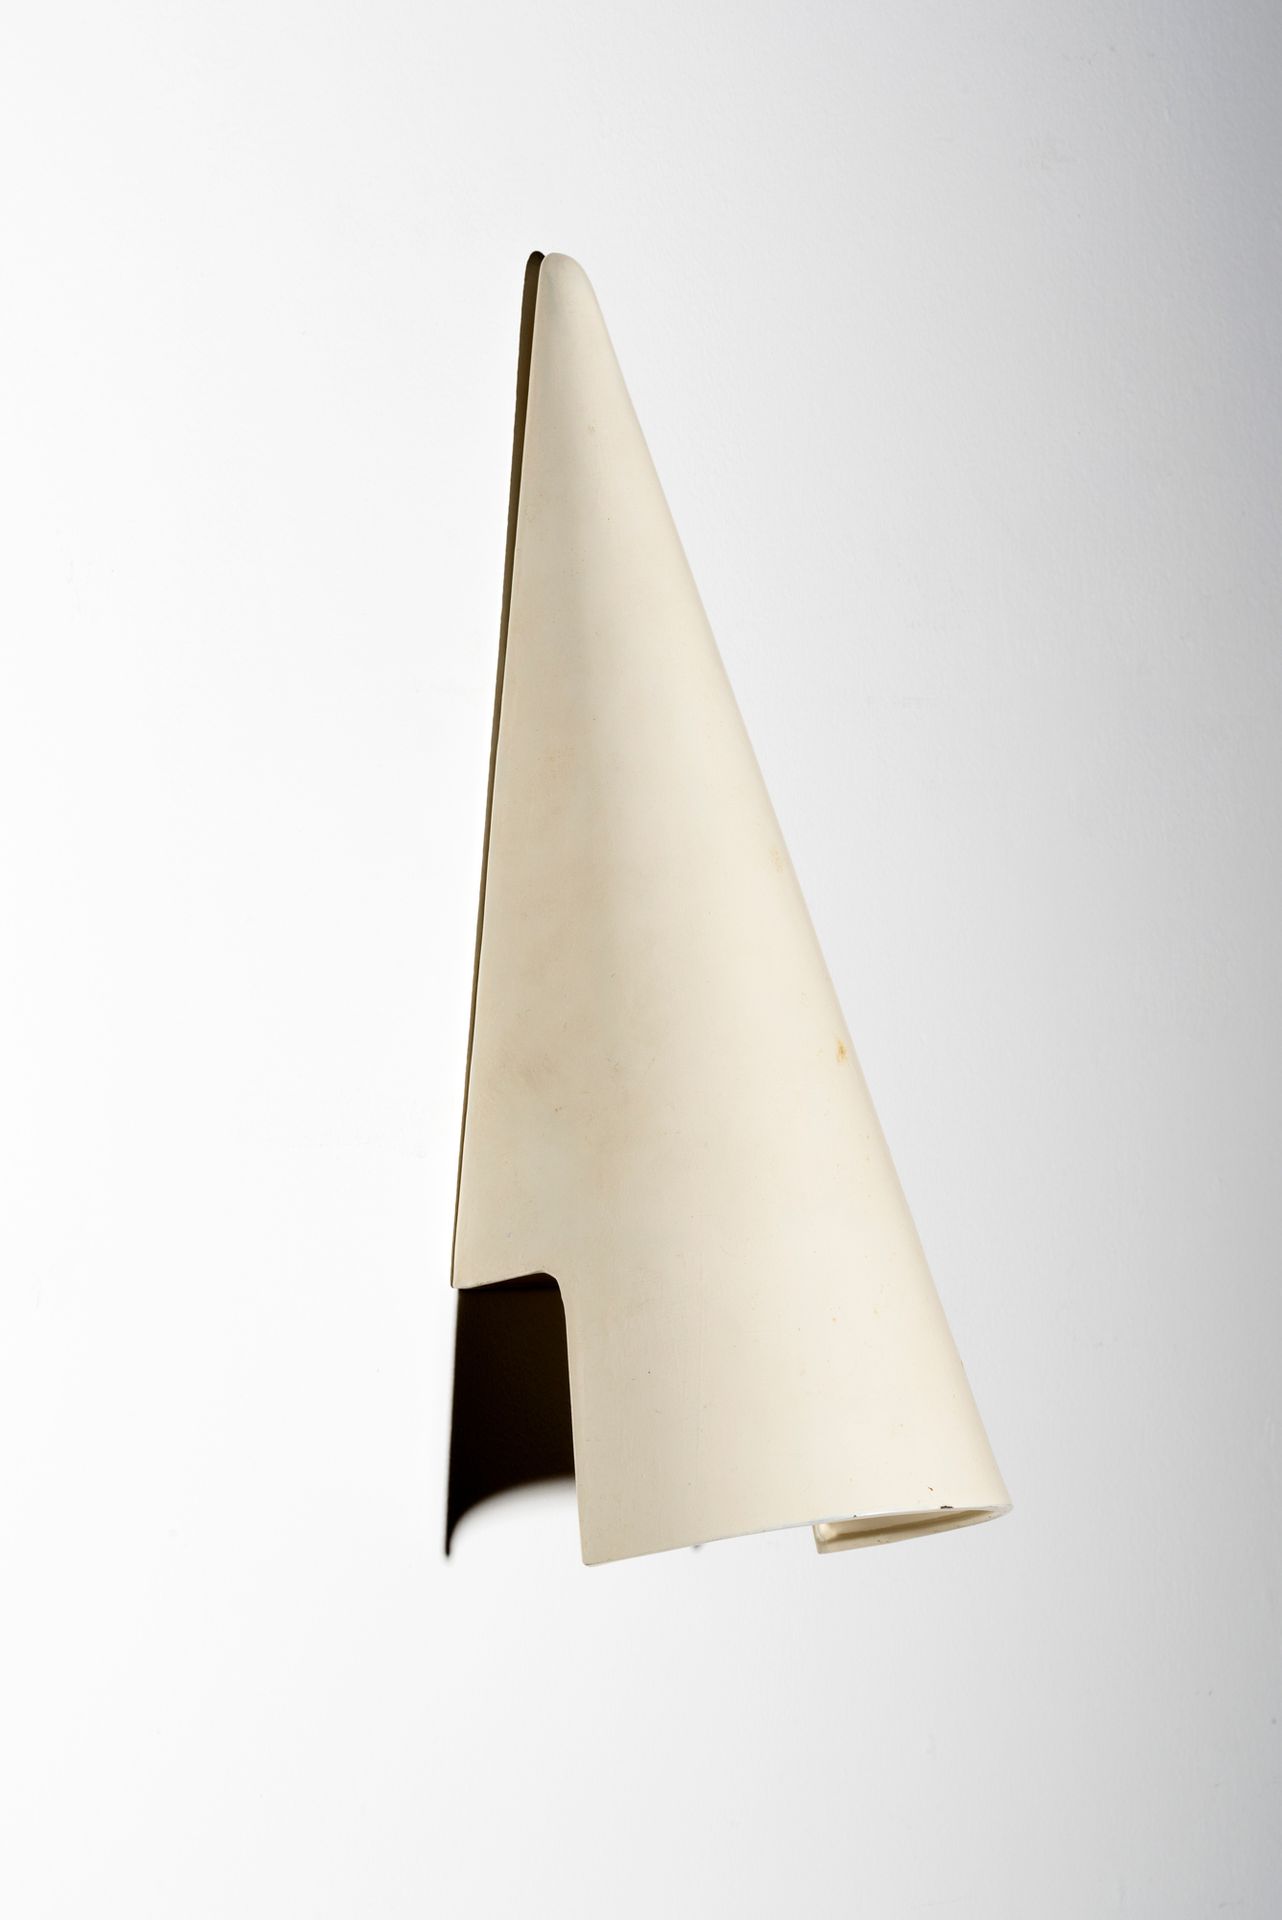 Alvar Aalto (1898-1976) 7239
Wall lamp
Lacquered metal.
Wandlamp
Gelakt metaal.
&hellip;